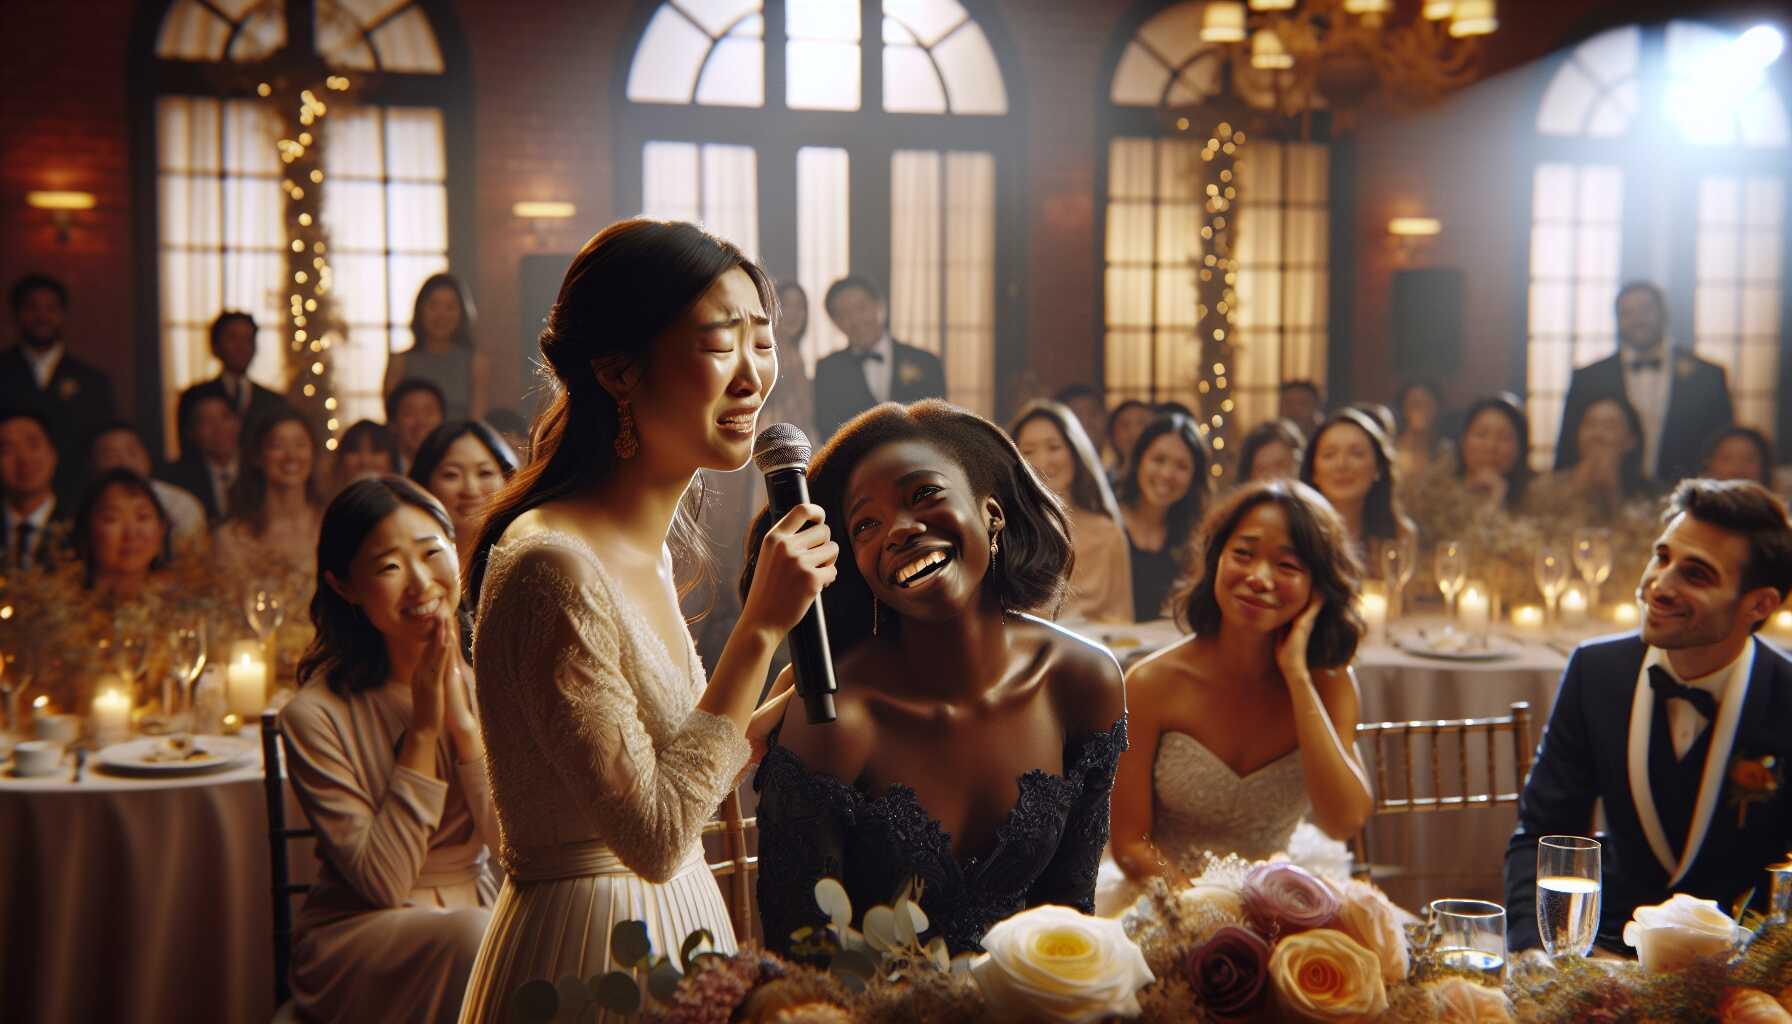 5 Heartfelt Speeches for Sister's Wedding: Make Her Day Unforgettable